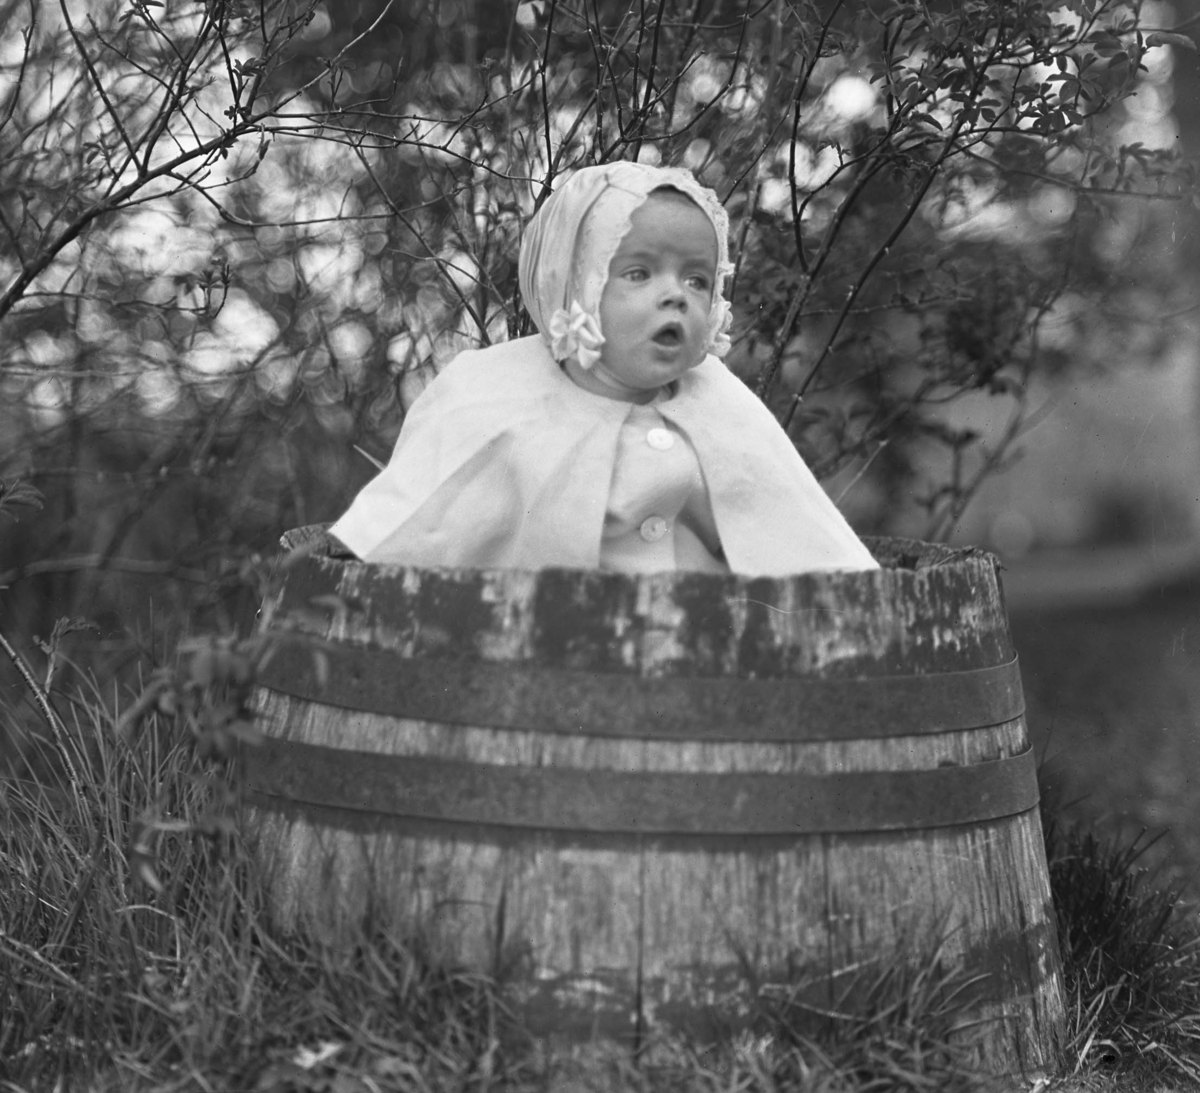 Baby in a barrel